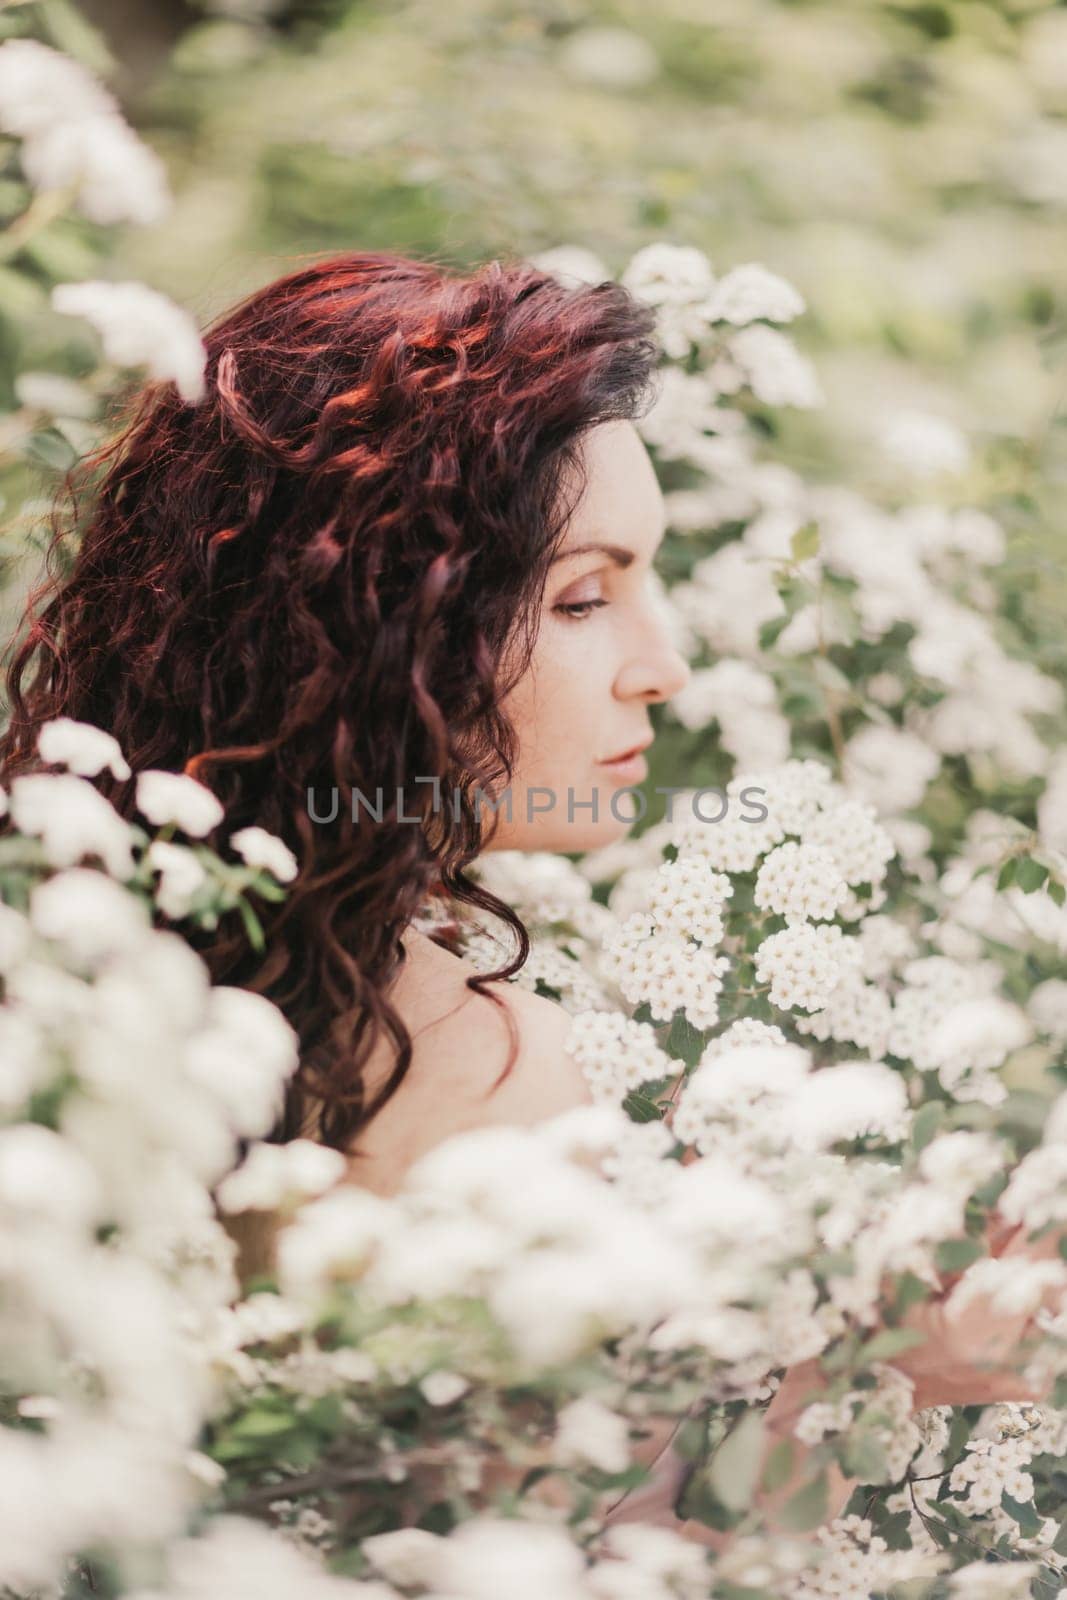 Woman spirea flowers. Portrait of a curly happy woman in a flowering bush with white spirea flowers